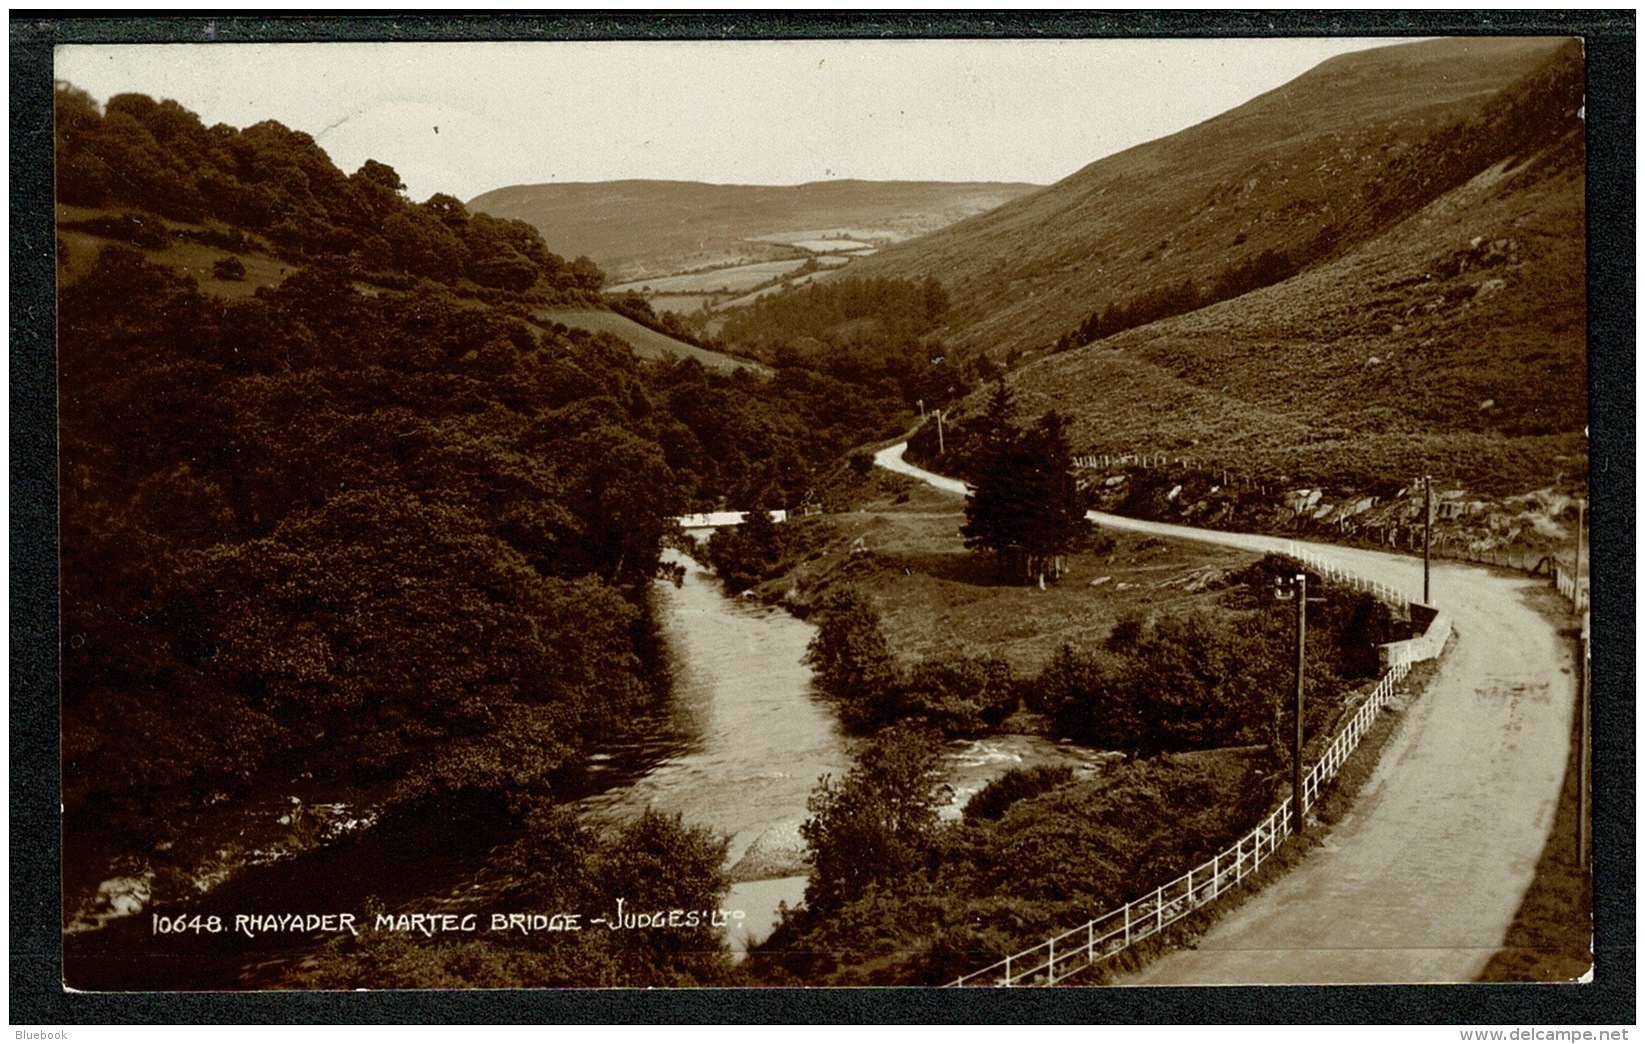 RB 1207 - 1951 Judges Real Photo Postcard - Rhayader Marteg Bridge - Radnorshire Wales - Radnorshire